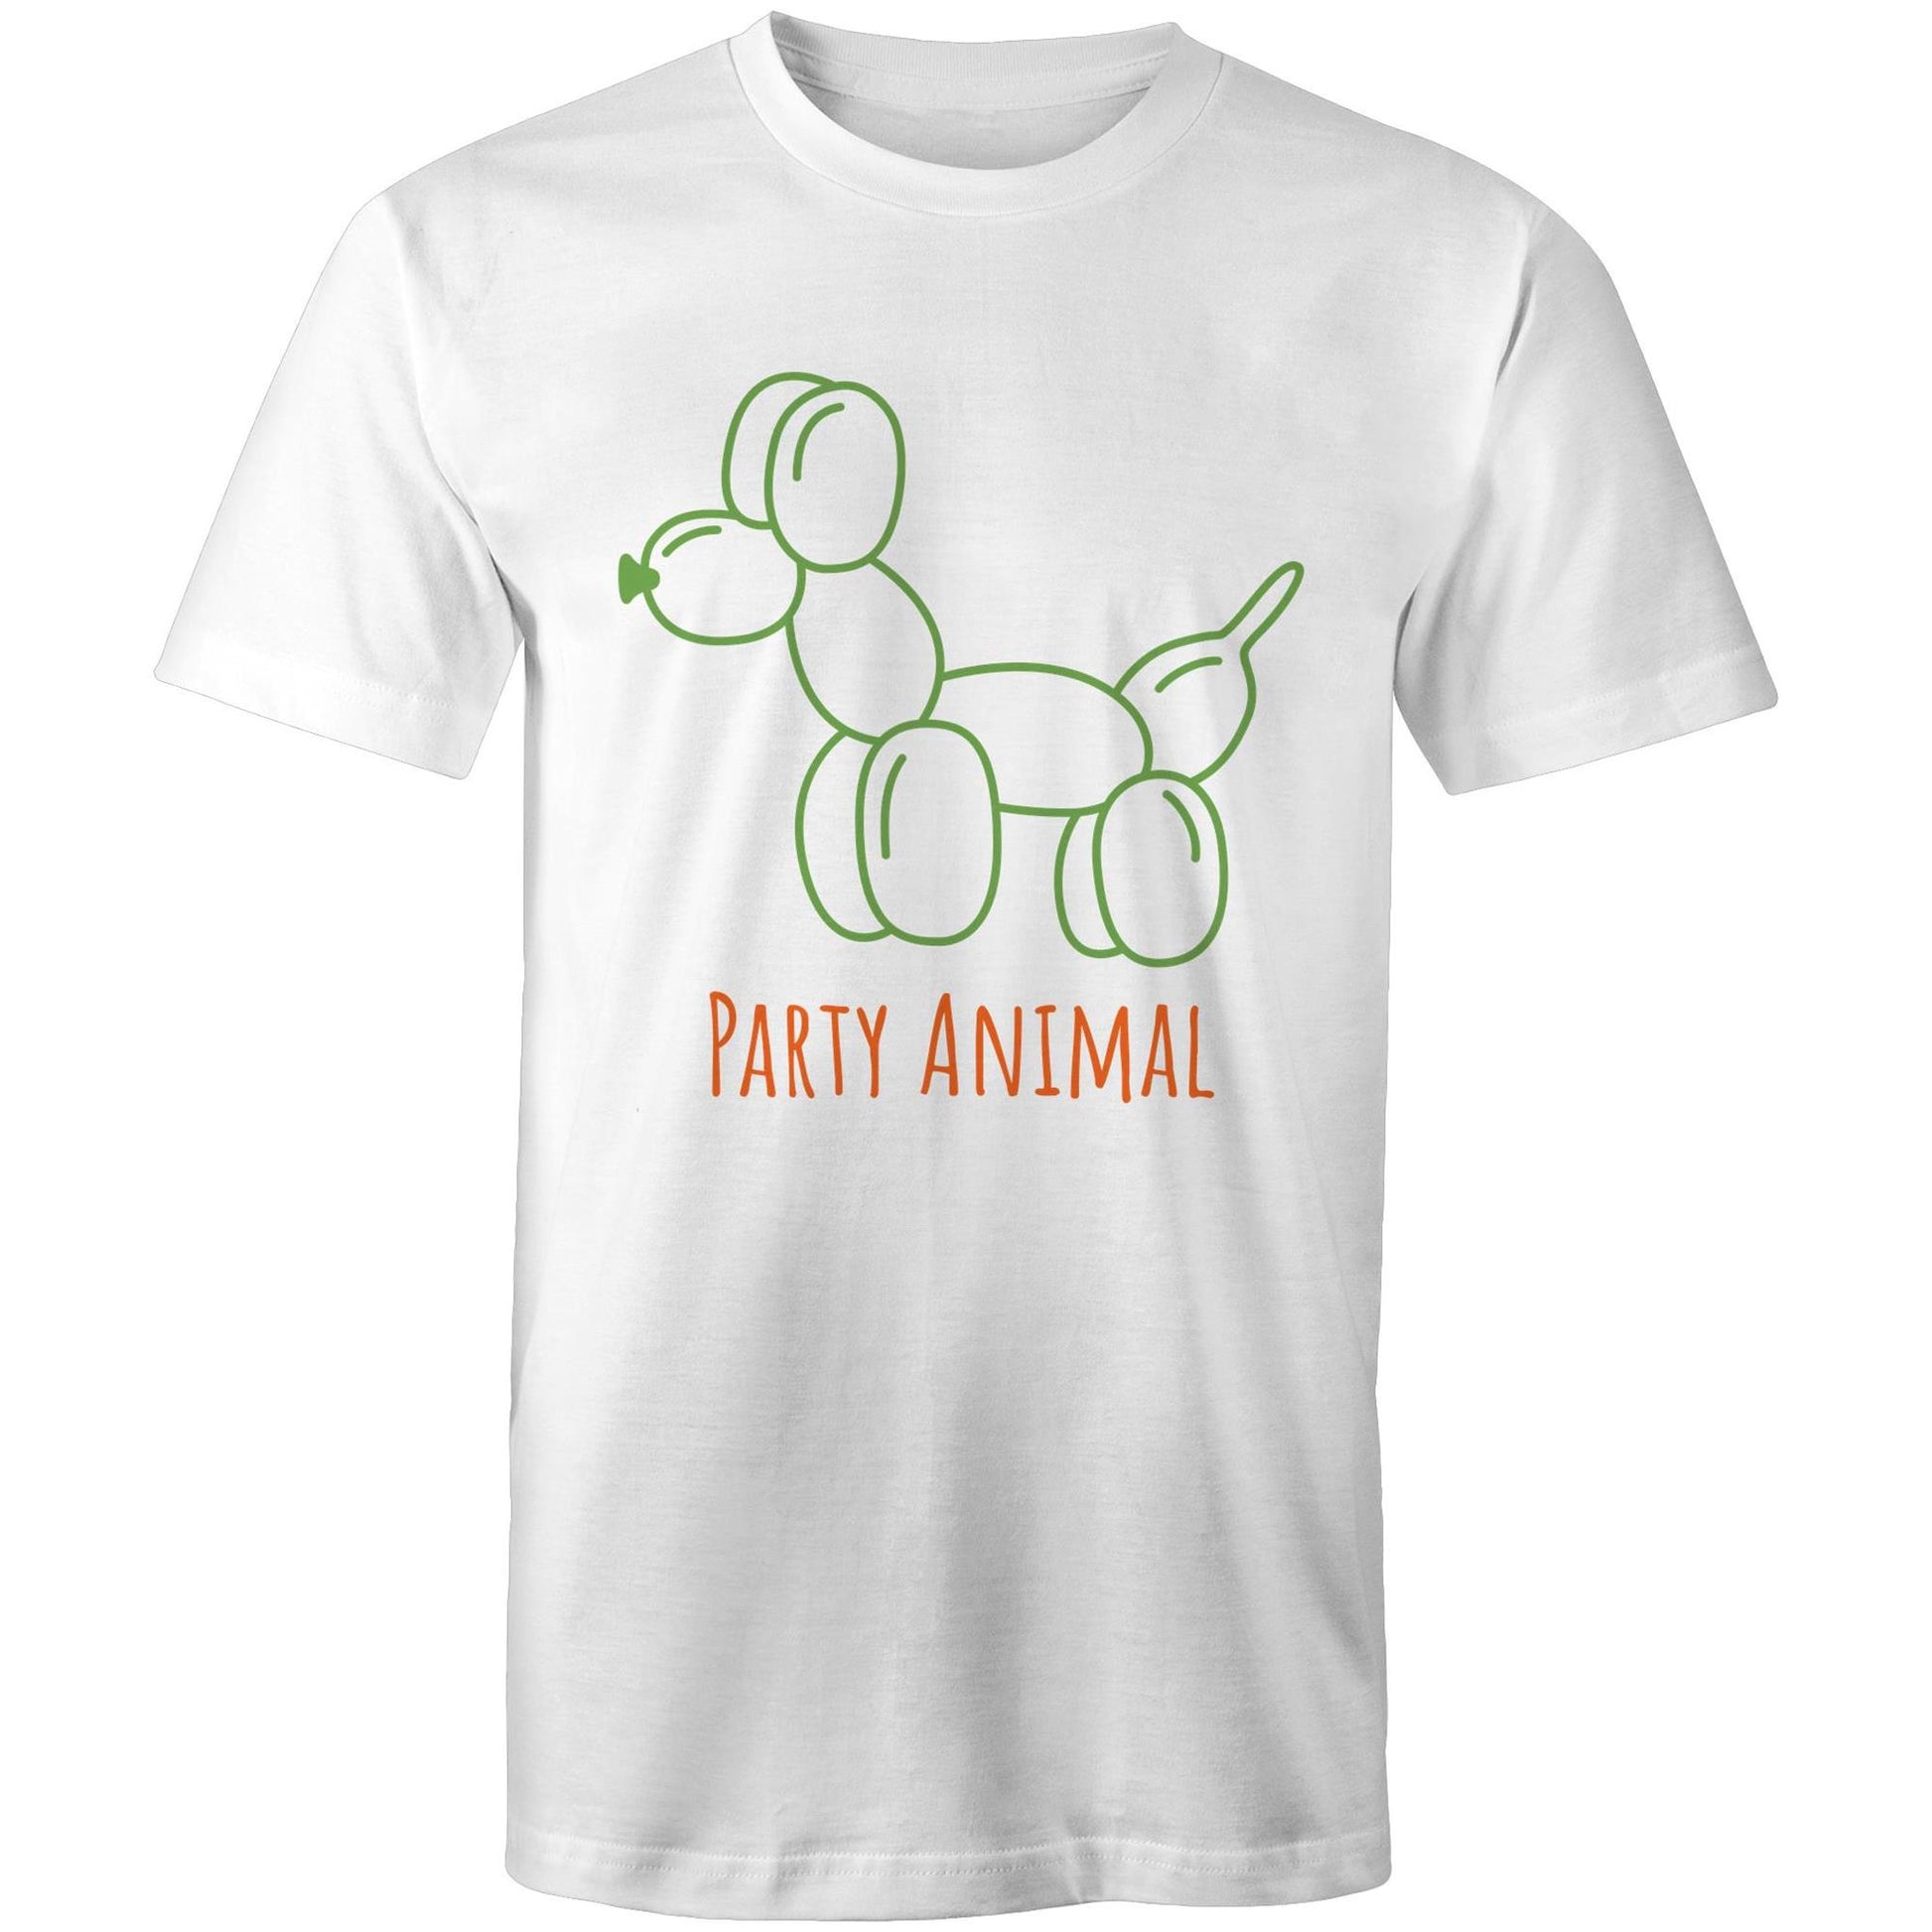 Party Animal - Mens T-Shirt White Mens T-shirt animal Funny Mens